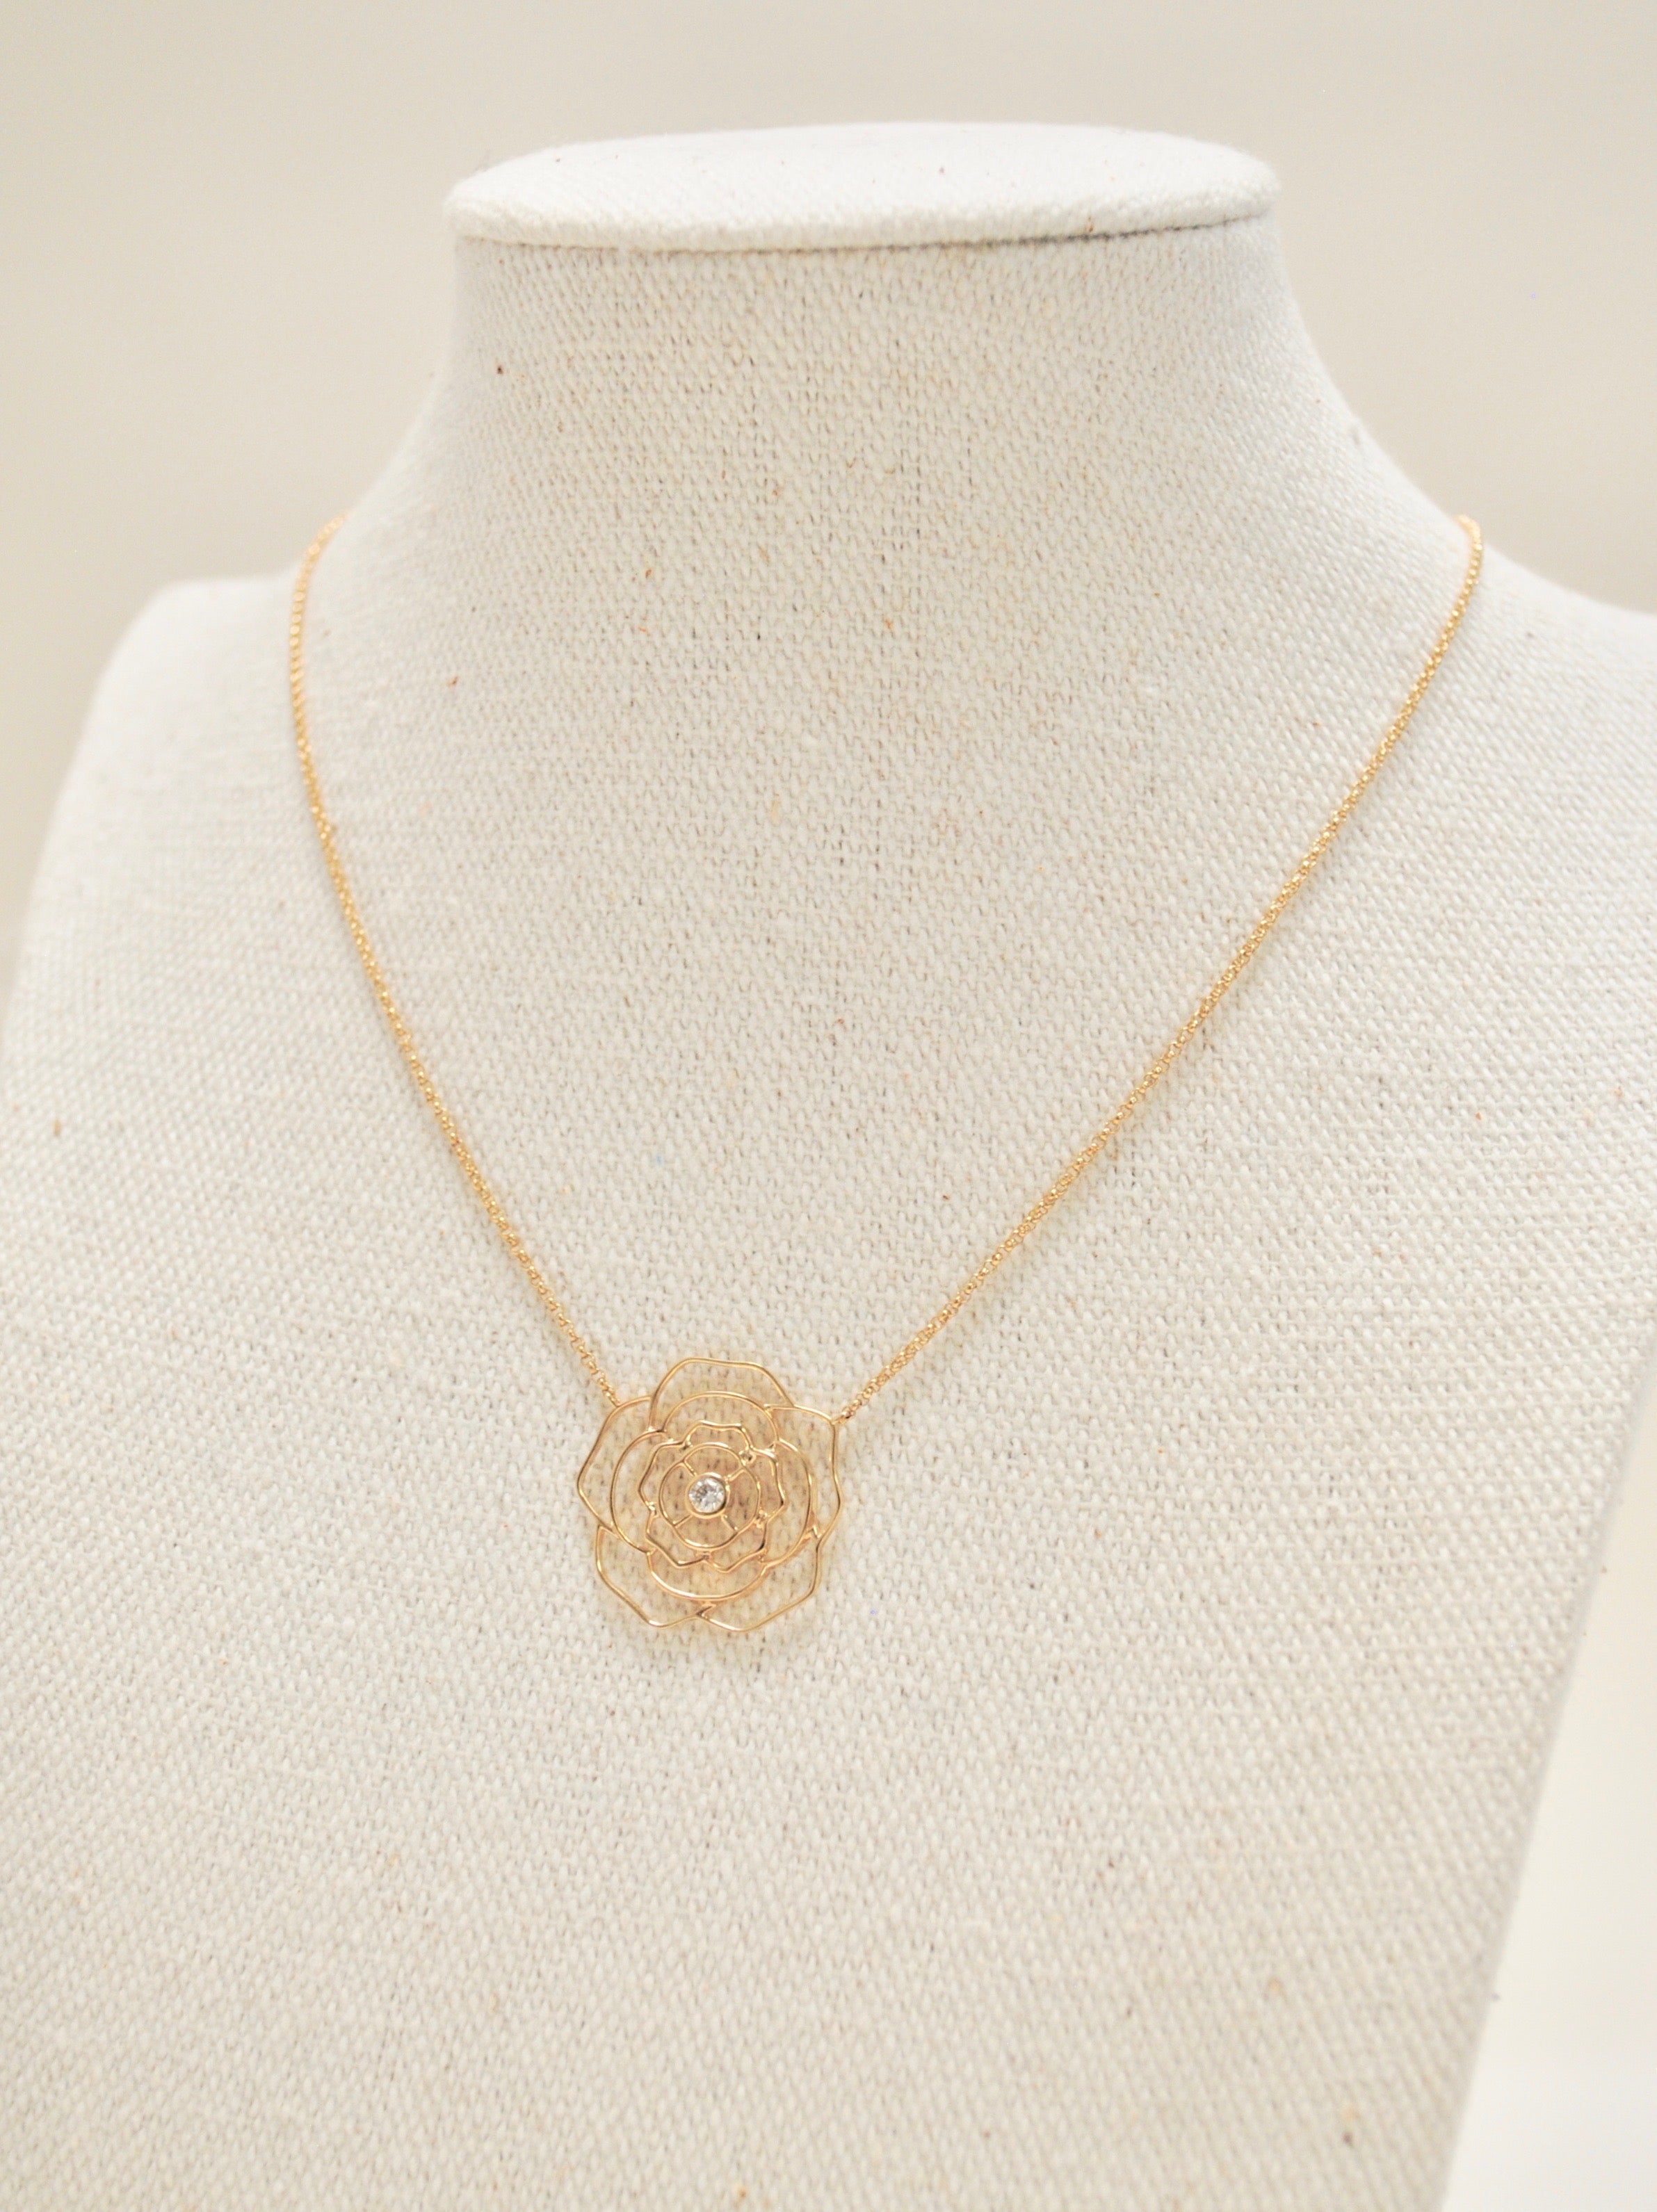 Diamond Rose Necklace